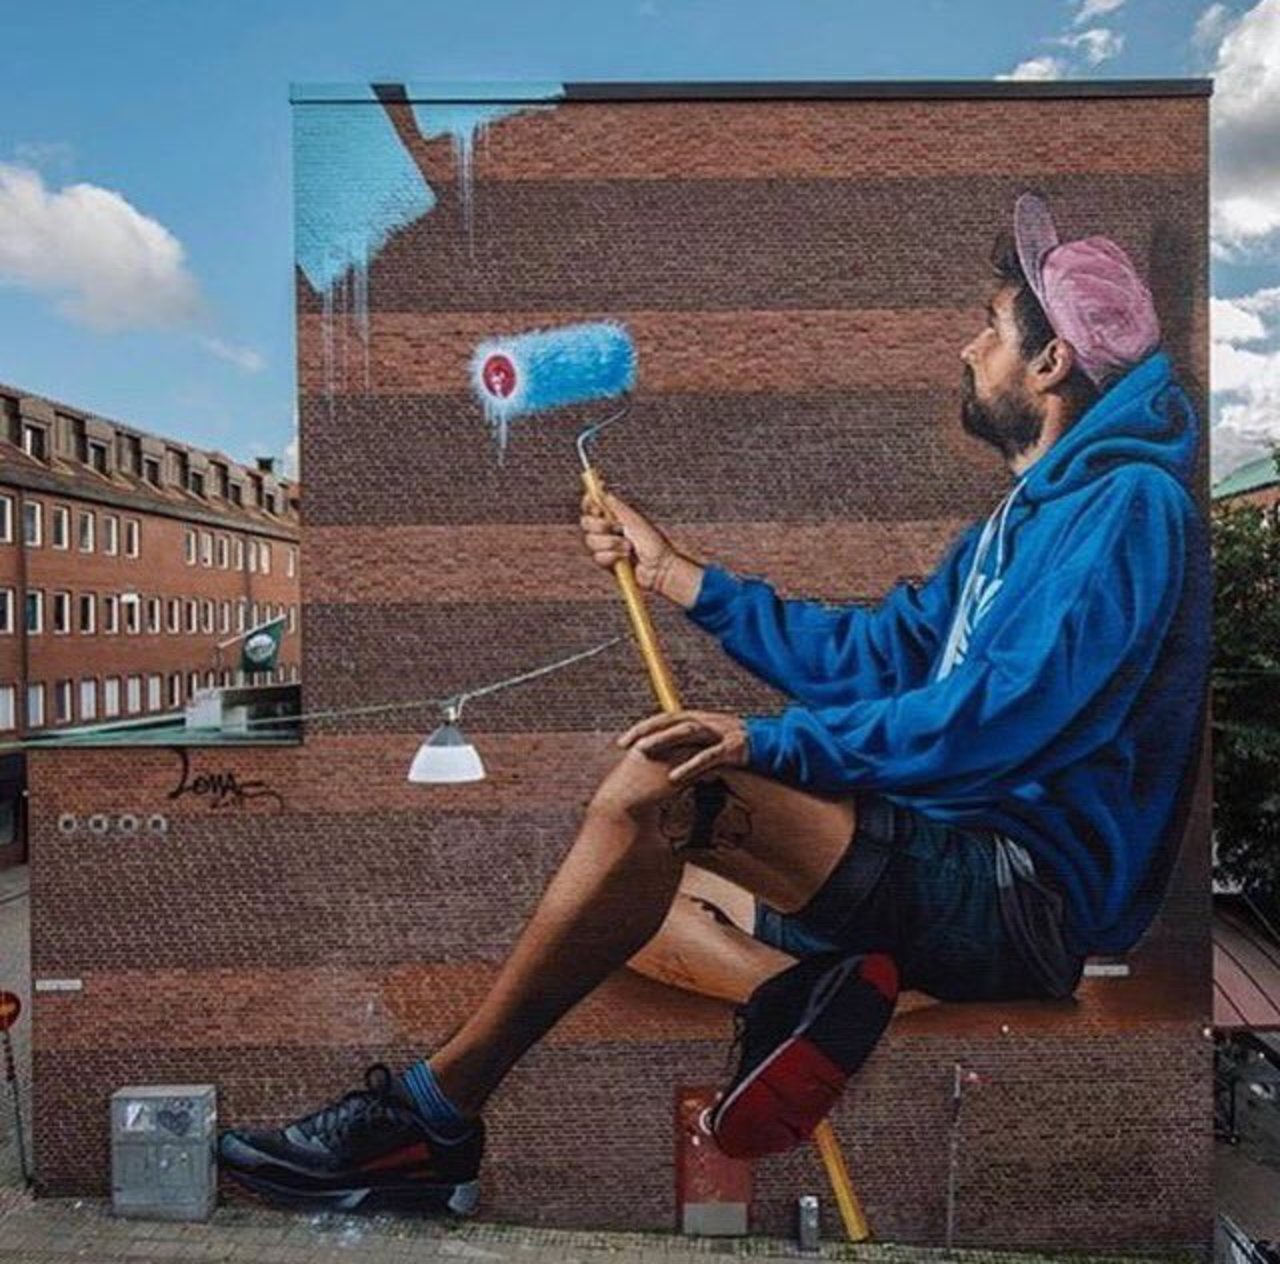 New work by Lonac#streetart #mural #graffiti #art https://t.co/lvG2Jzvzgb